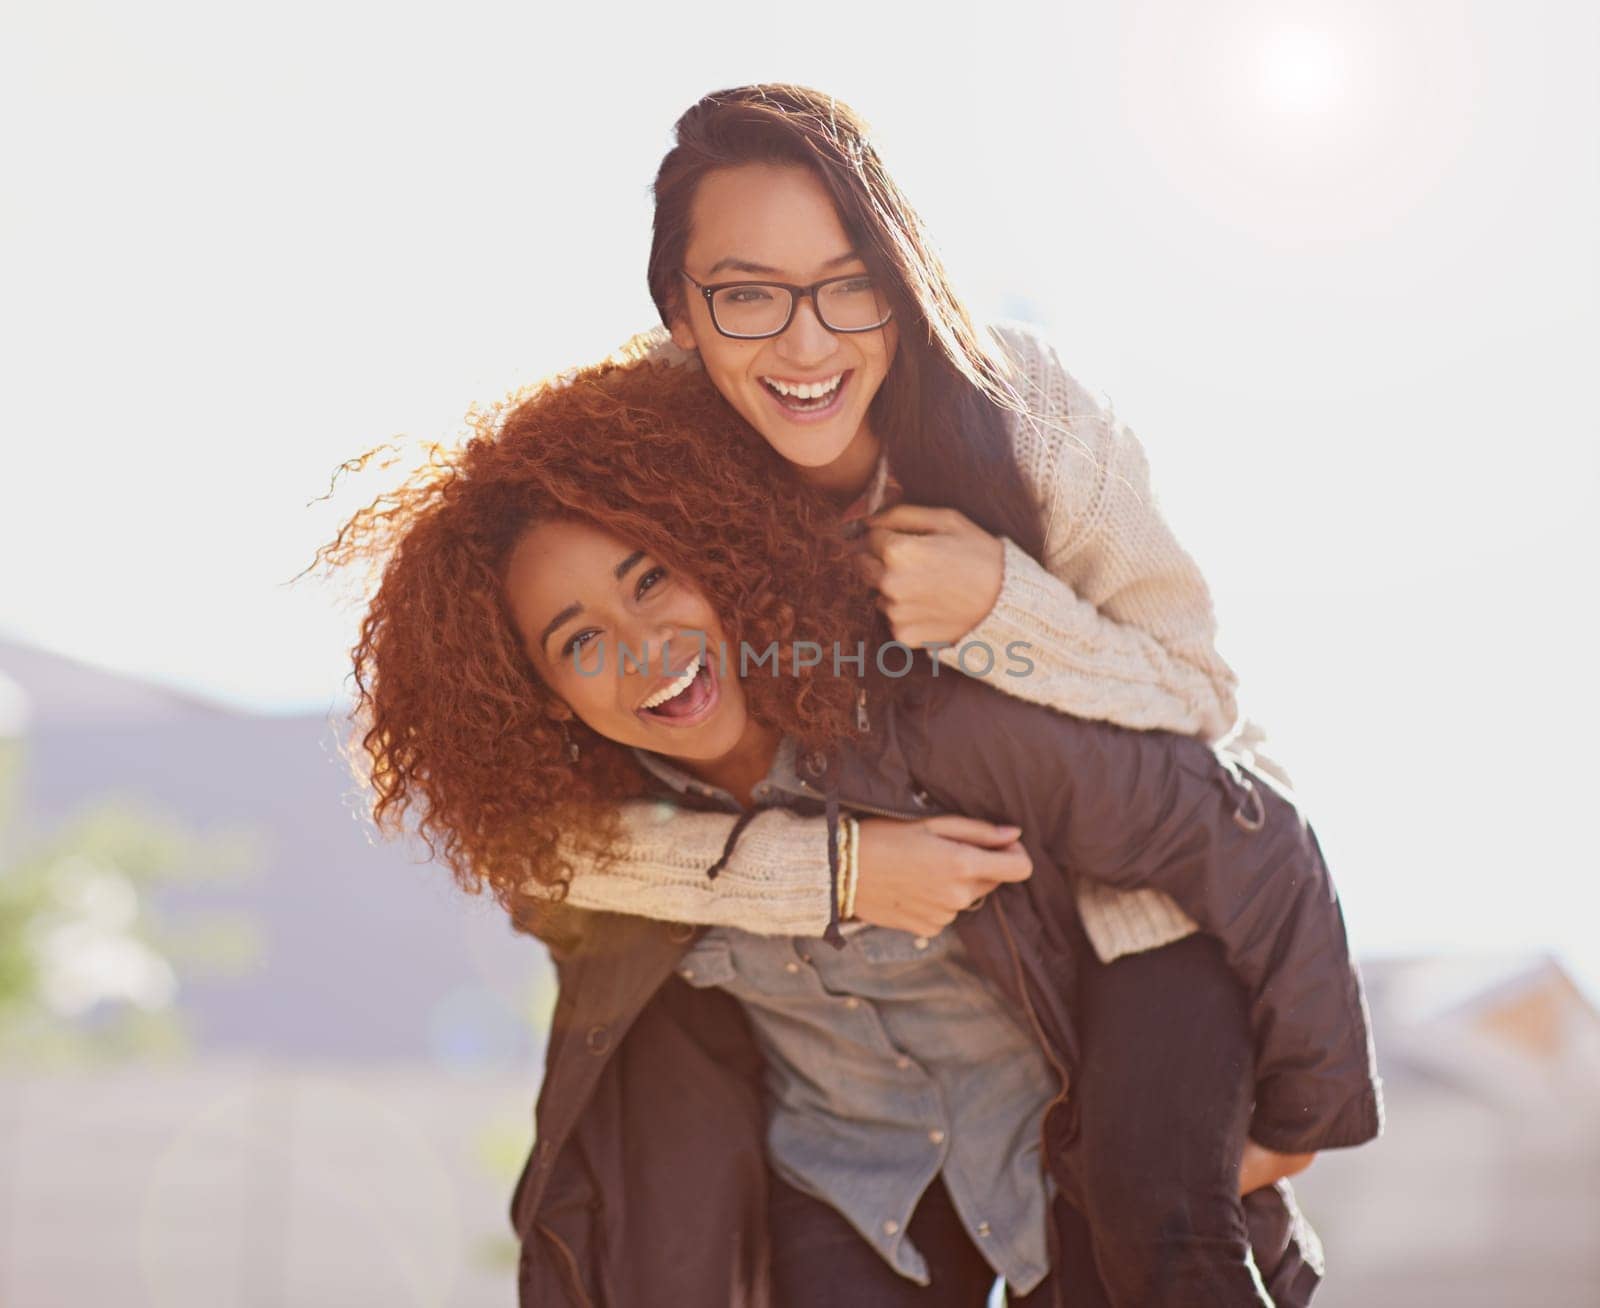 Laughter is timeless. girlfriends bonding outdoors